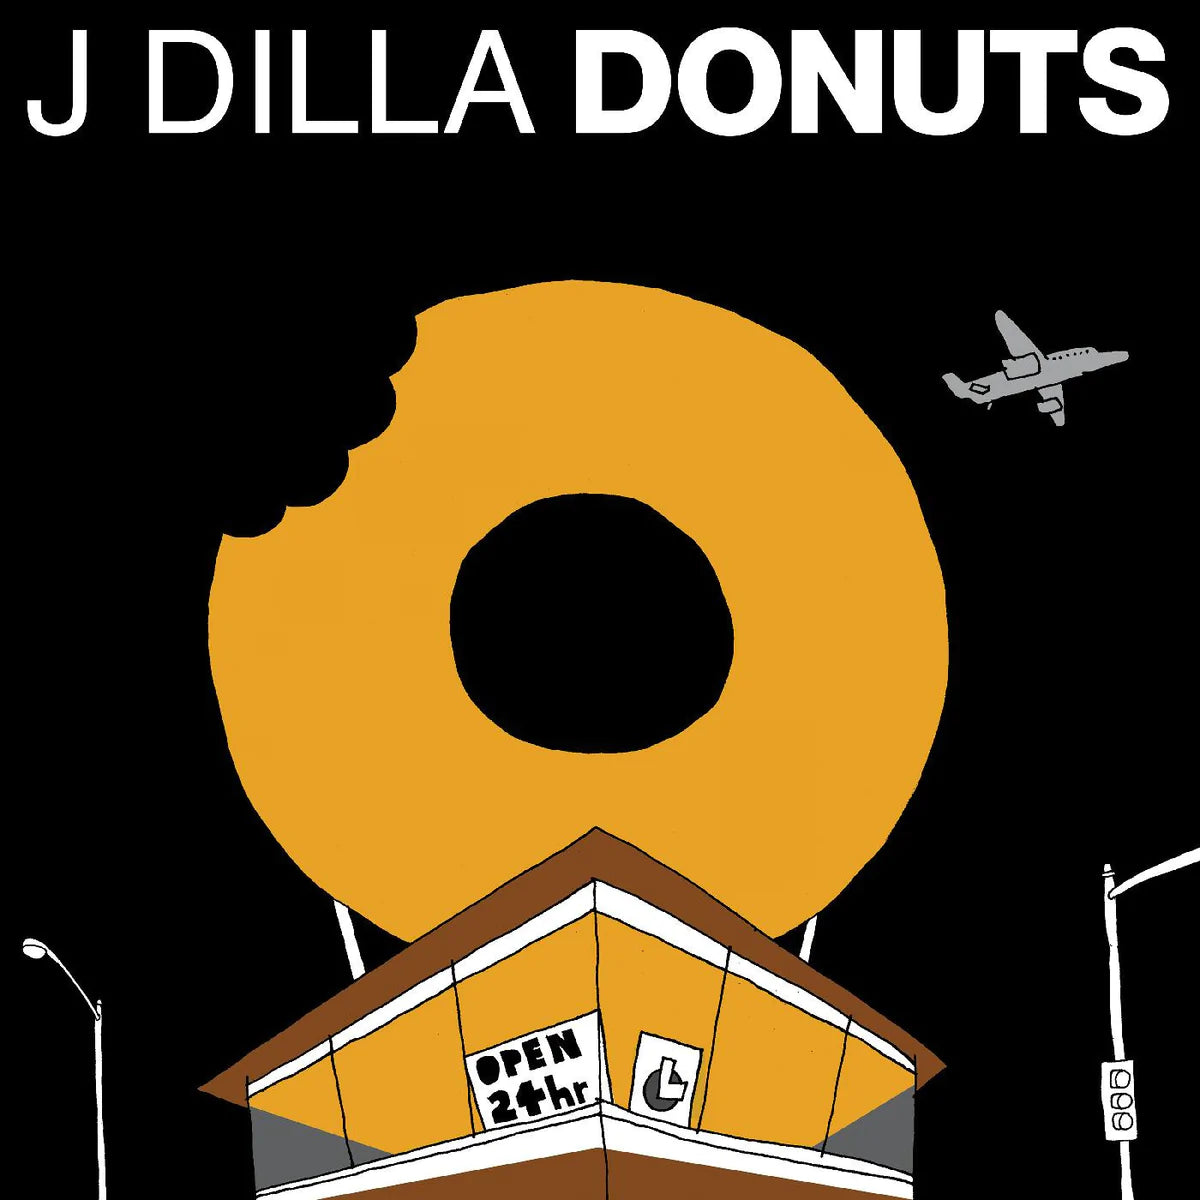 J DILLA - DONUTS Vinyl LP